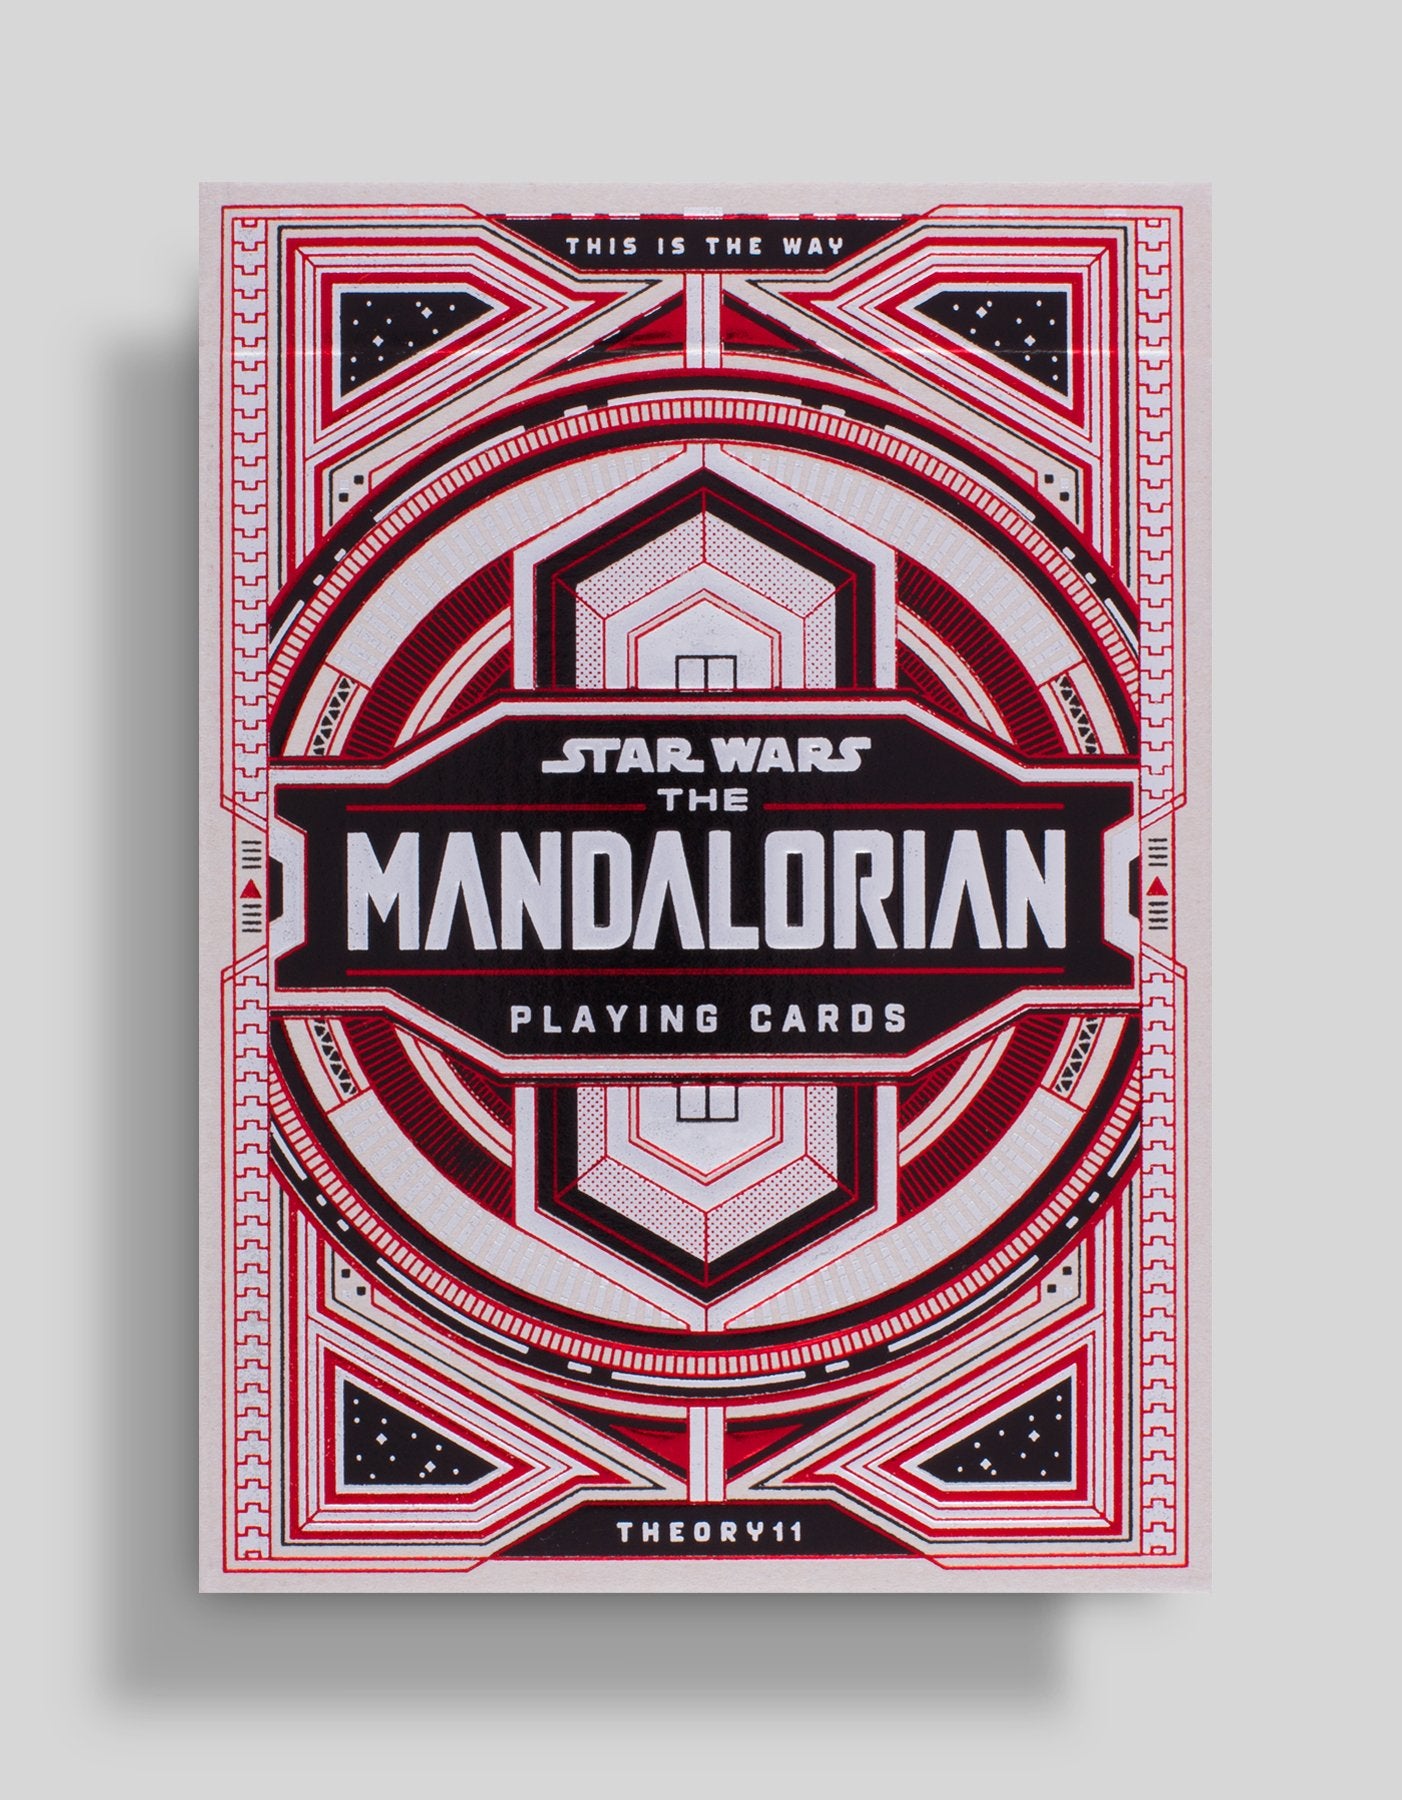 Theory11 Playing Cards: Mandalorian